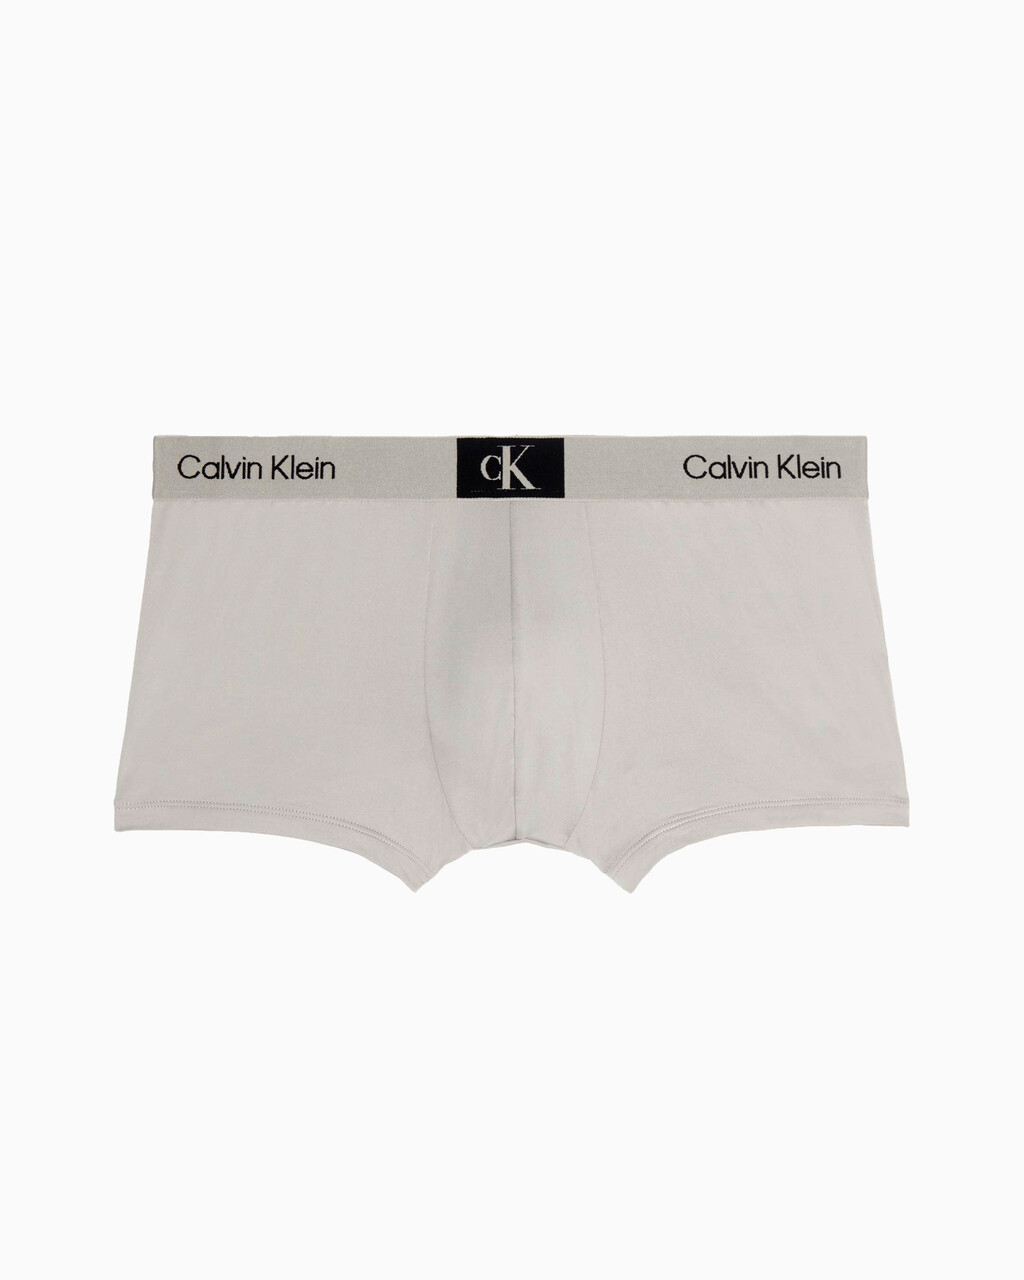 CALVIN KLEIN 1996 超細纖維低腰內褲, Authentic Grey, hi-res